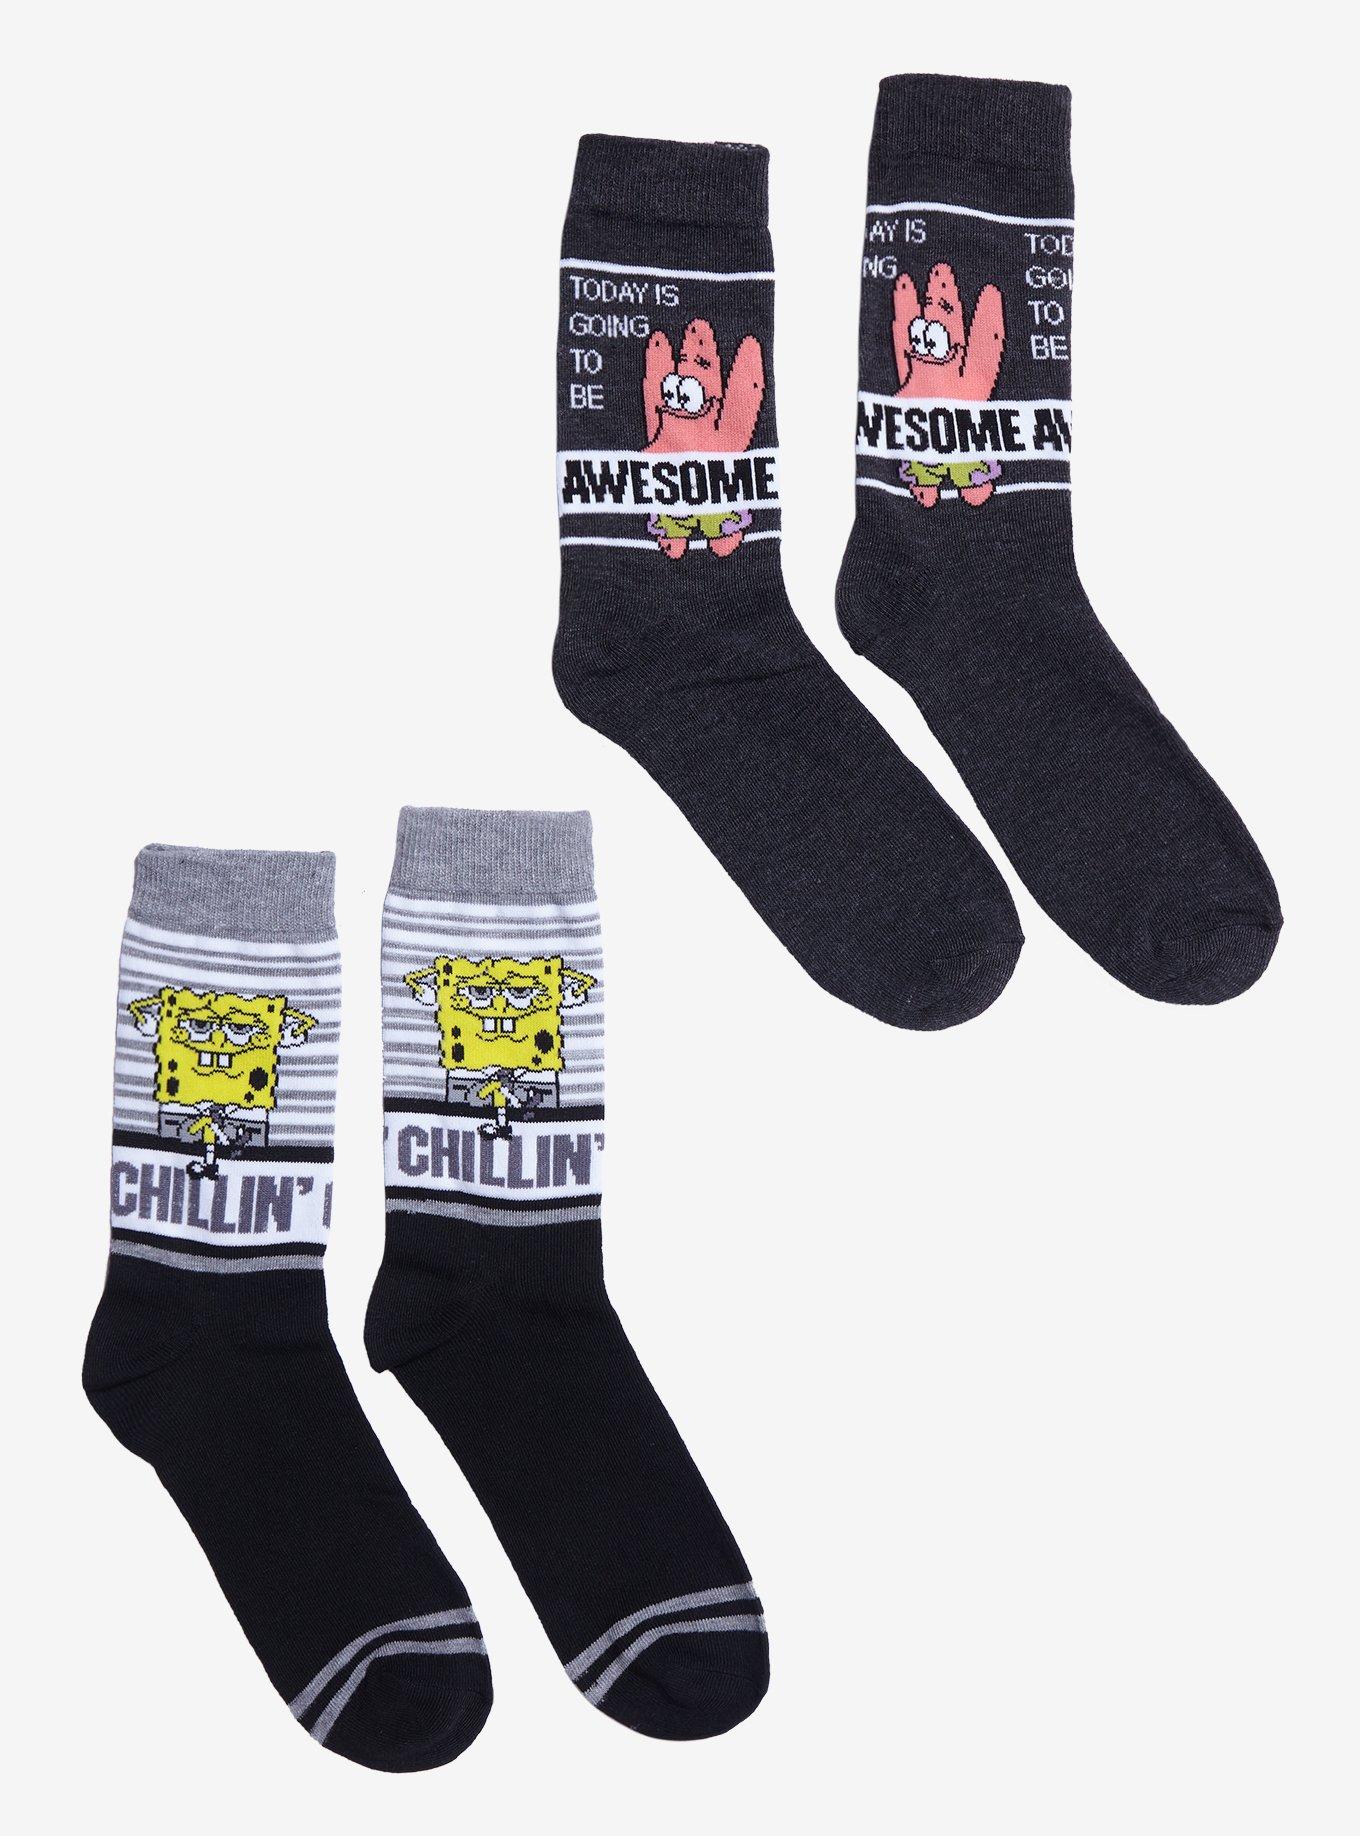 Spongebob Squarepants Adult Quarter Crew Socks - 2-pack Of Bikini Bottom  Fun! : Target